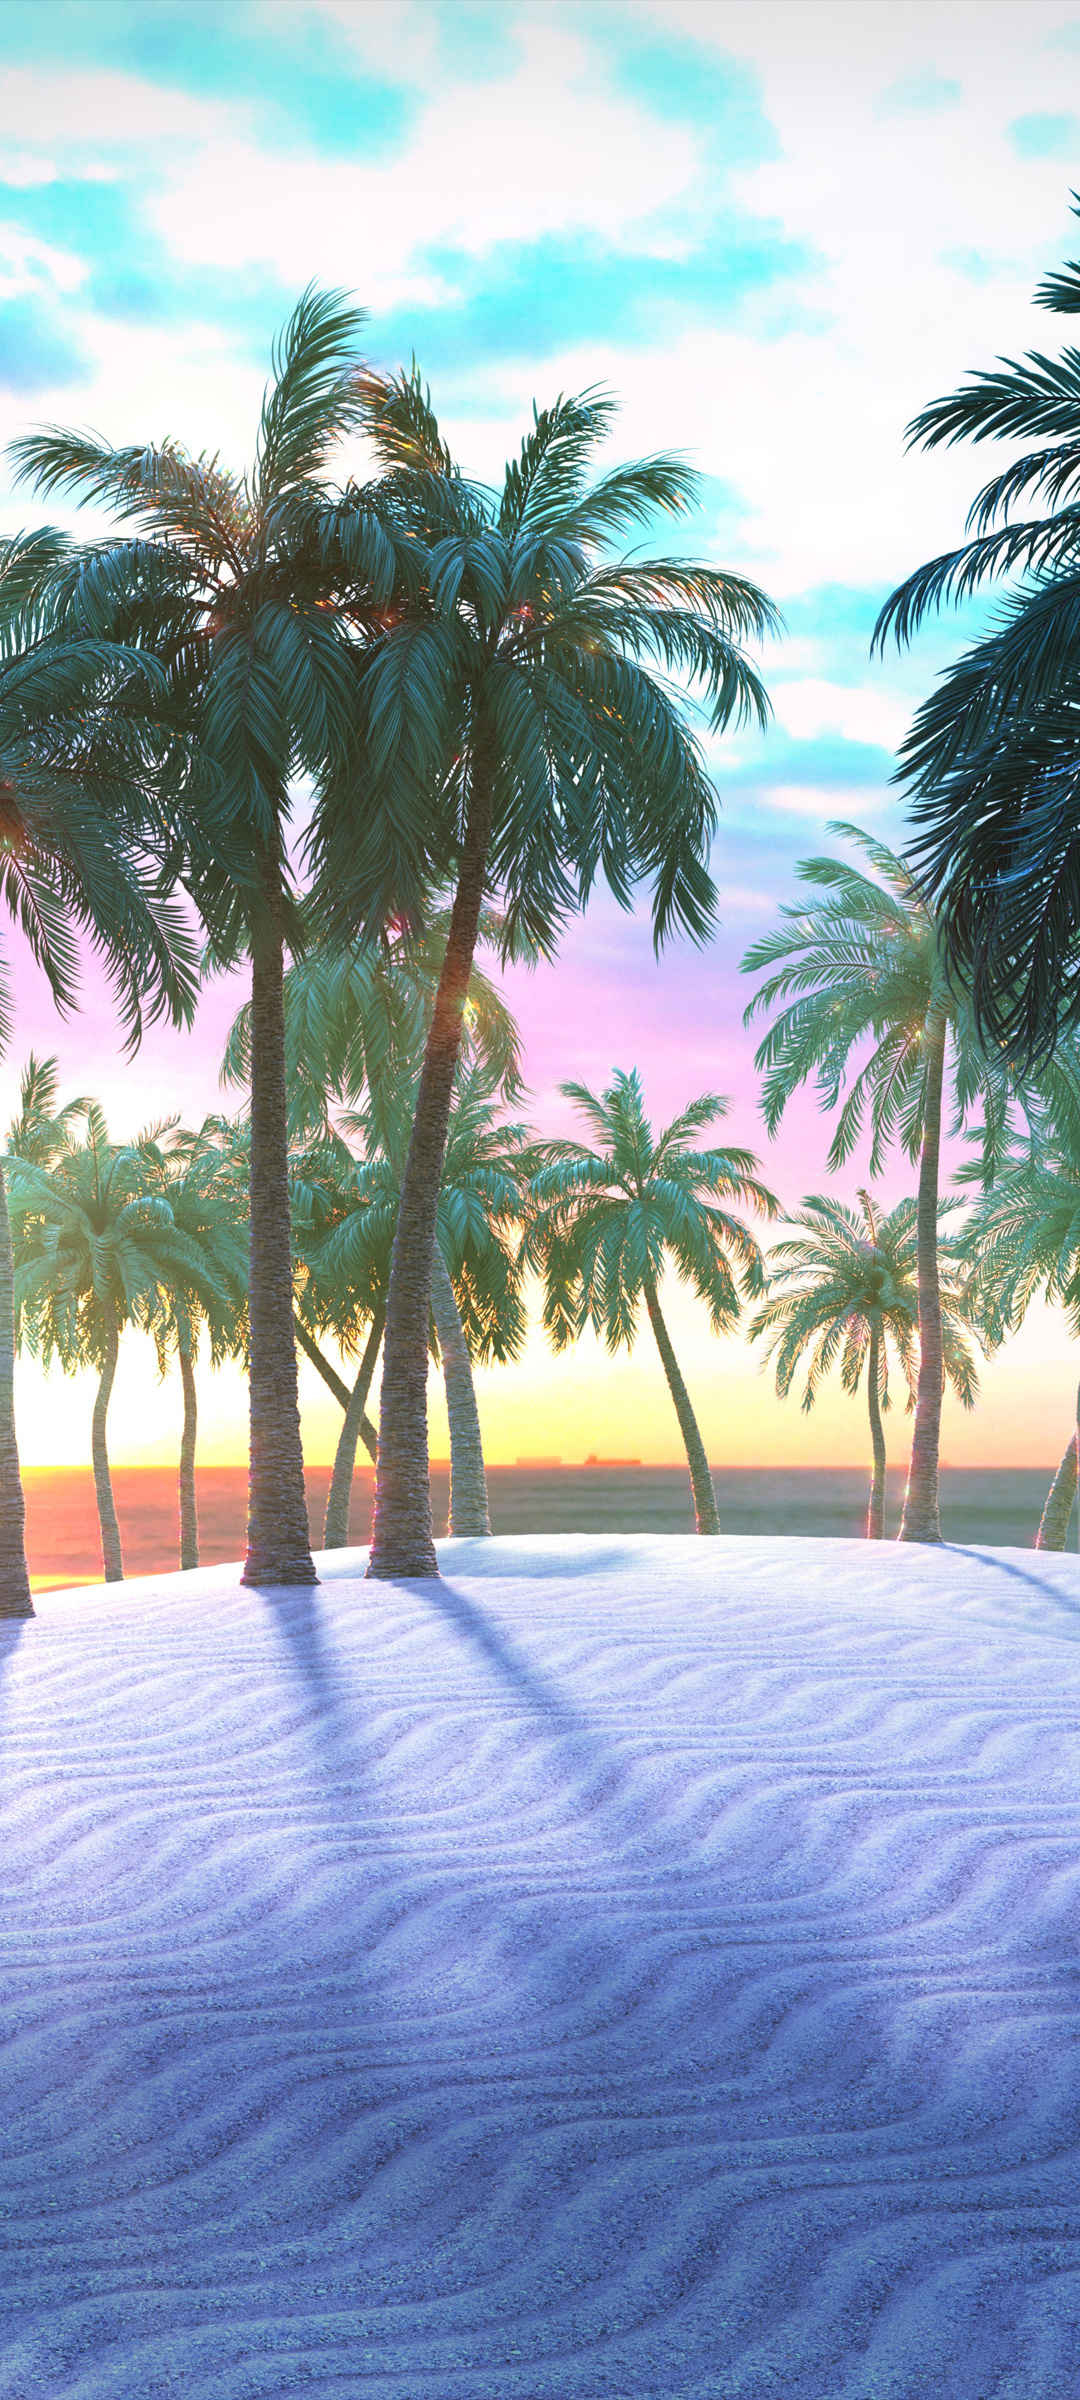 椰子树风景手机壁纸图片